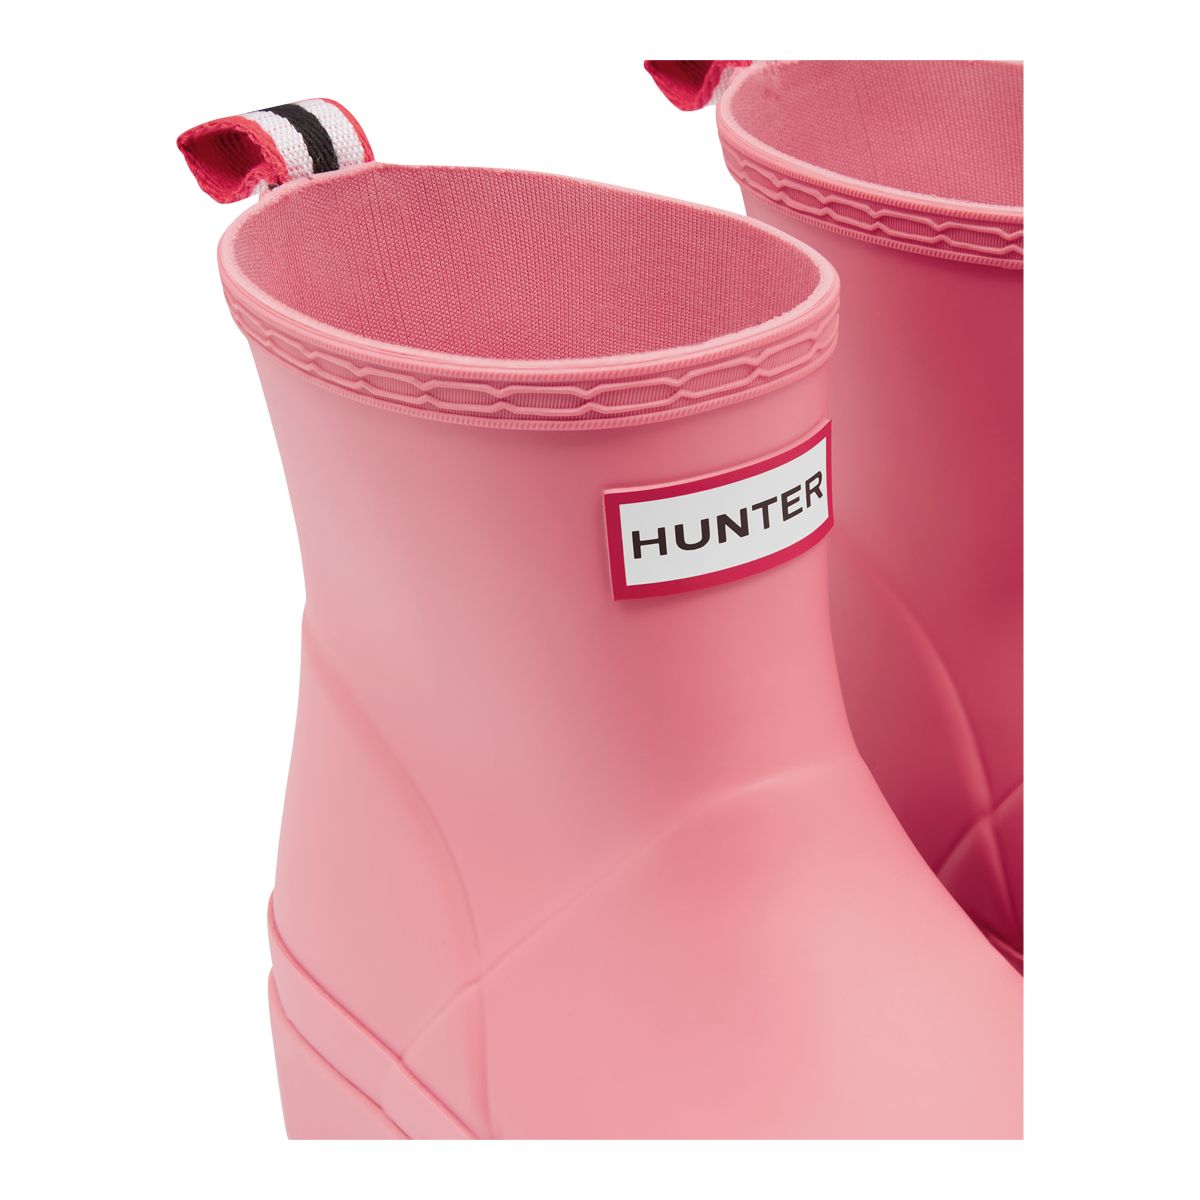 Hunter rain boots for petites review: Womens packable Tour (calf runs  narrow) vs Kids Original - Extra Petite